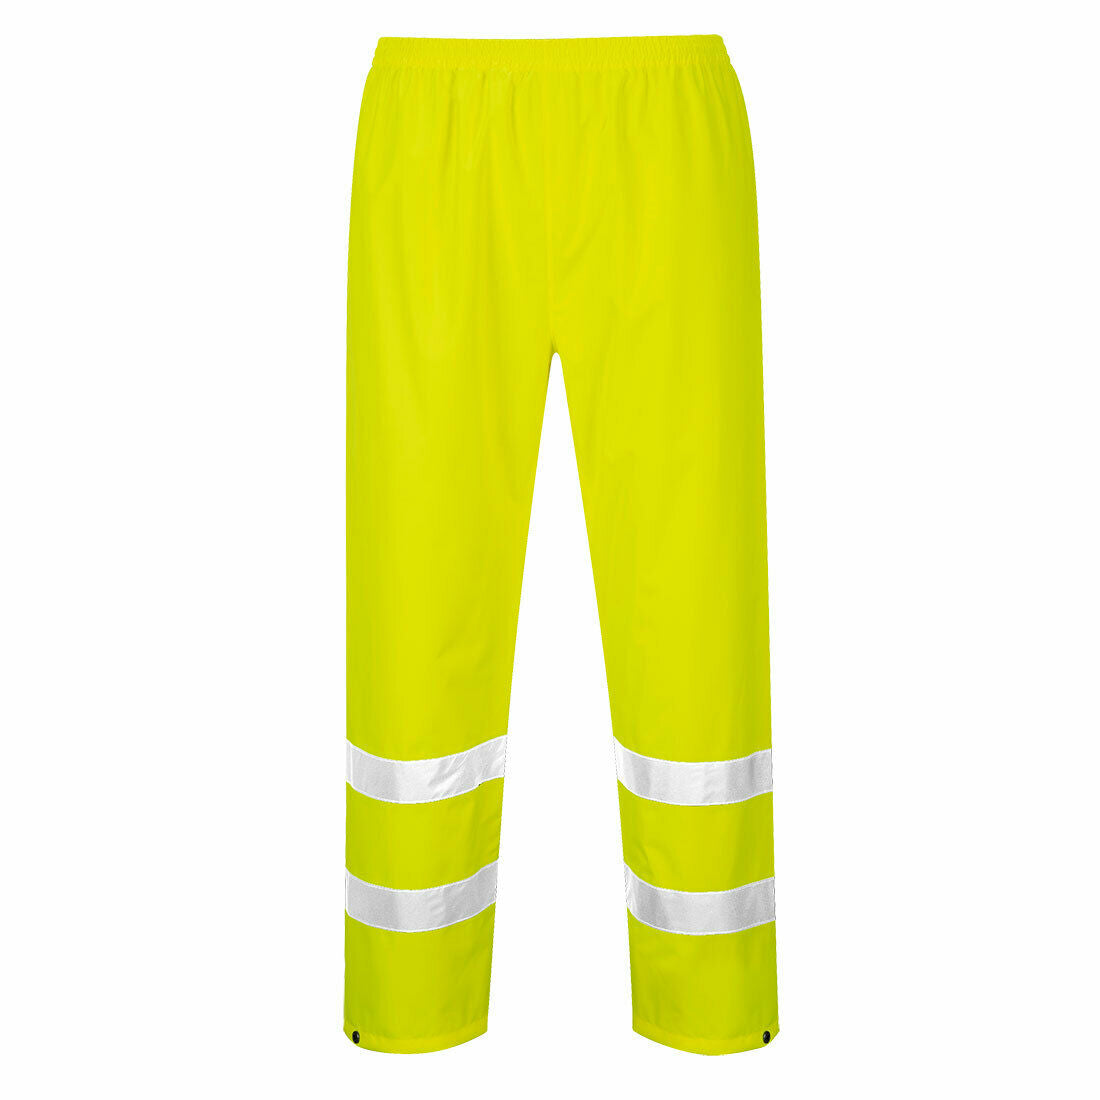 Portwest Mens Hi-Vis Rain Trousers Lightweight Waterproof Work Safety Pants H441